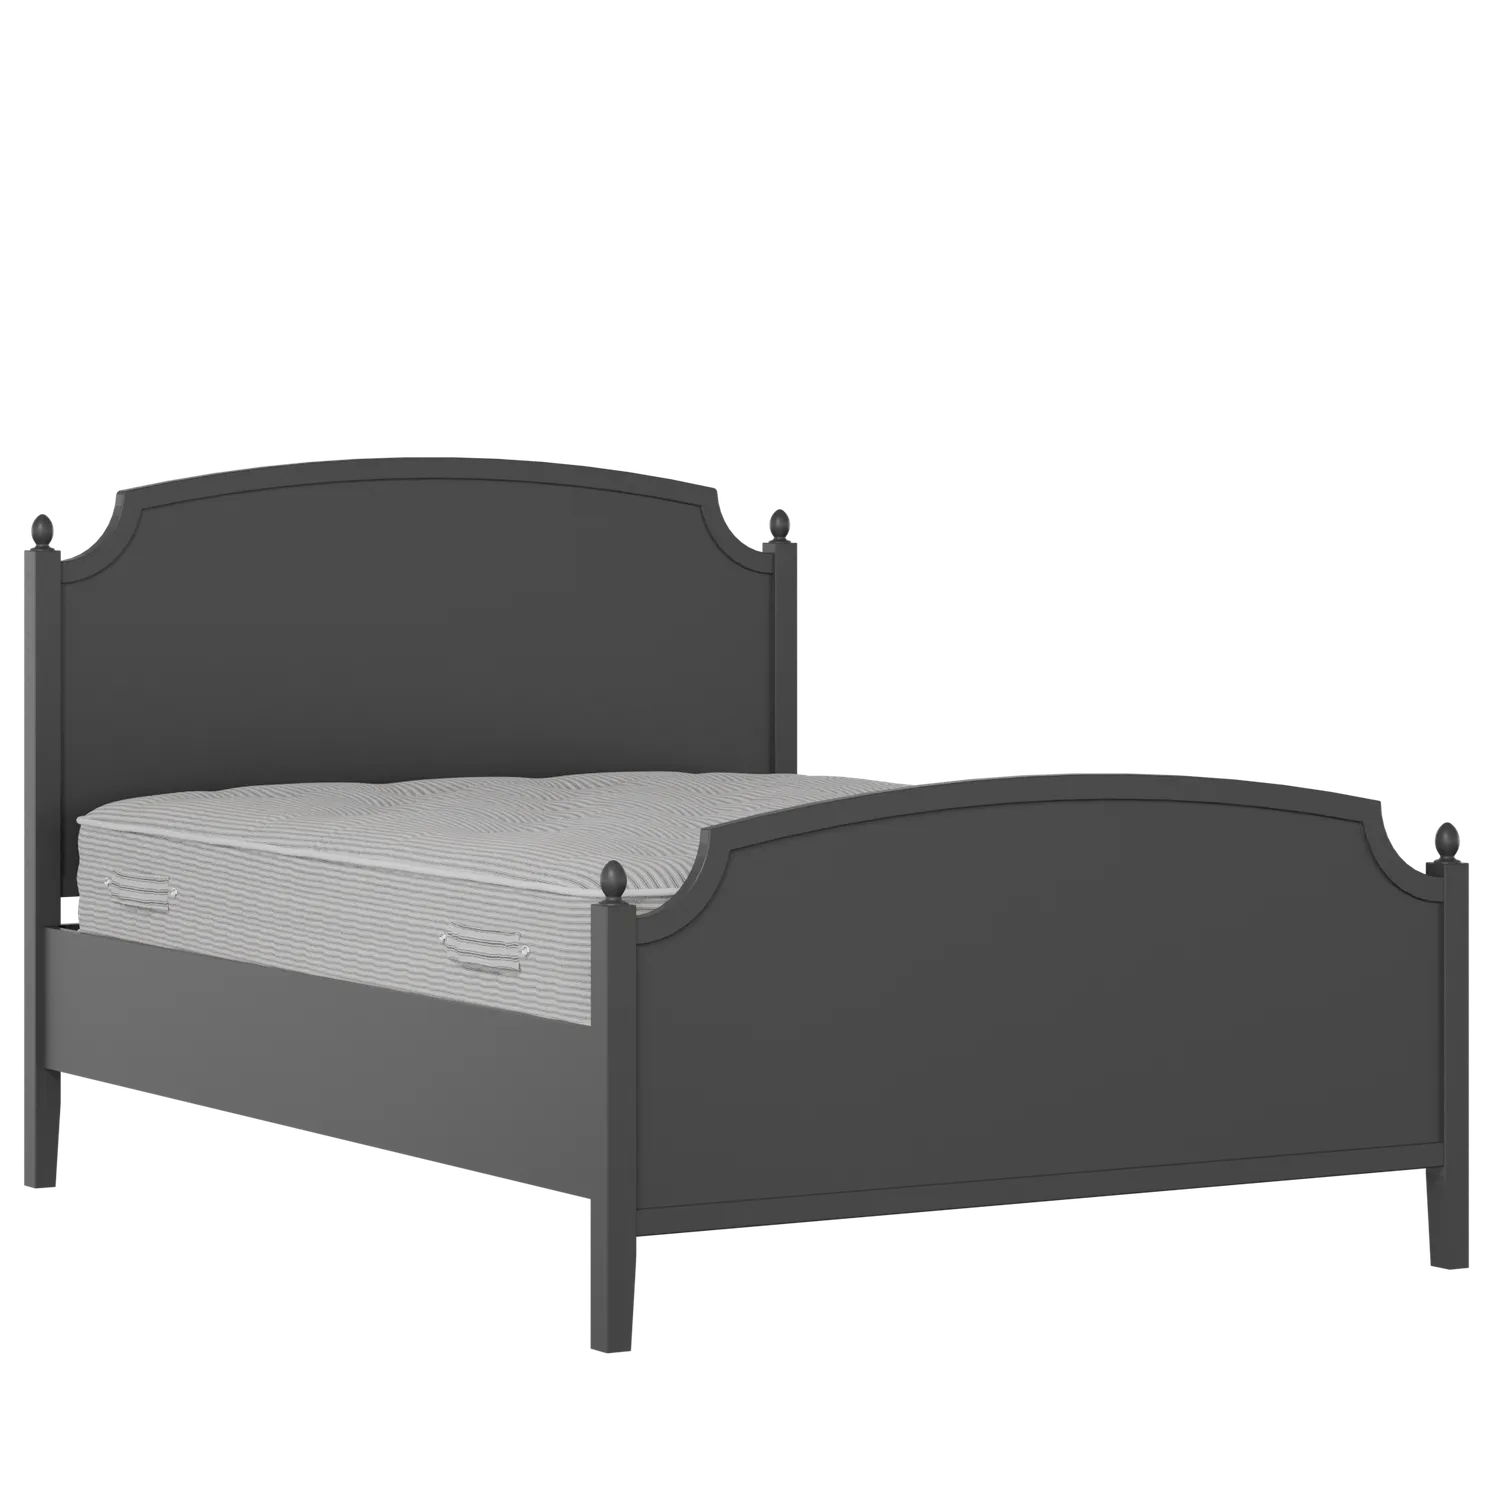 Kipling Painted painted wood bed in black with Juno mattress